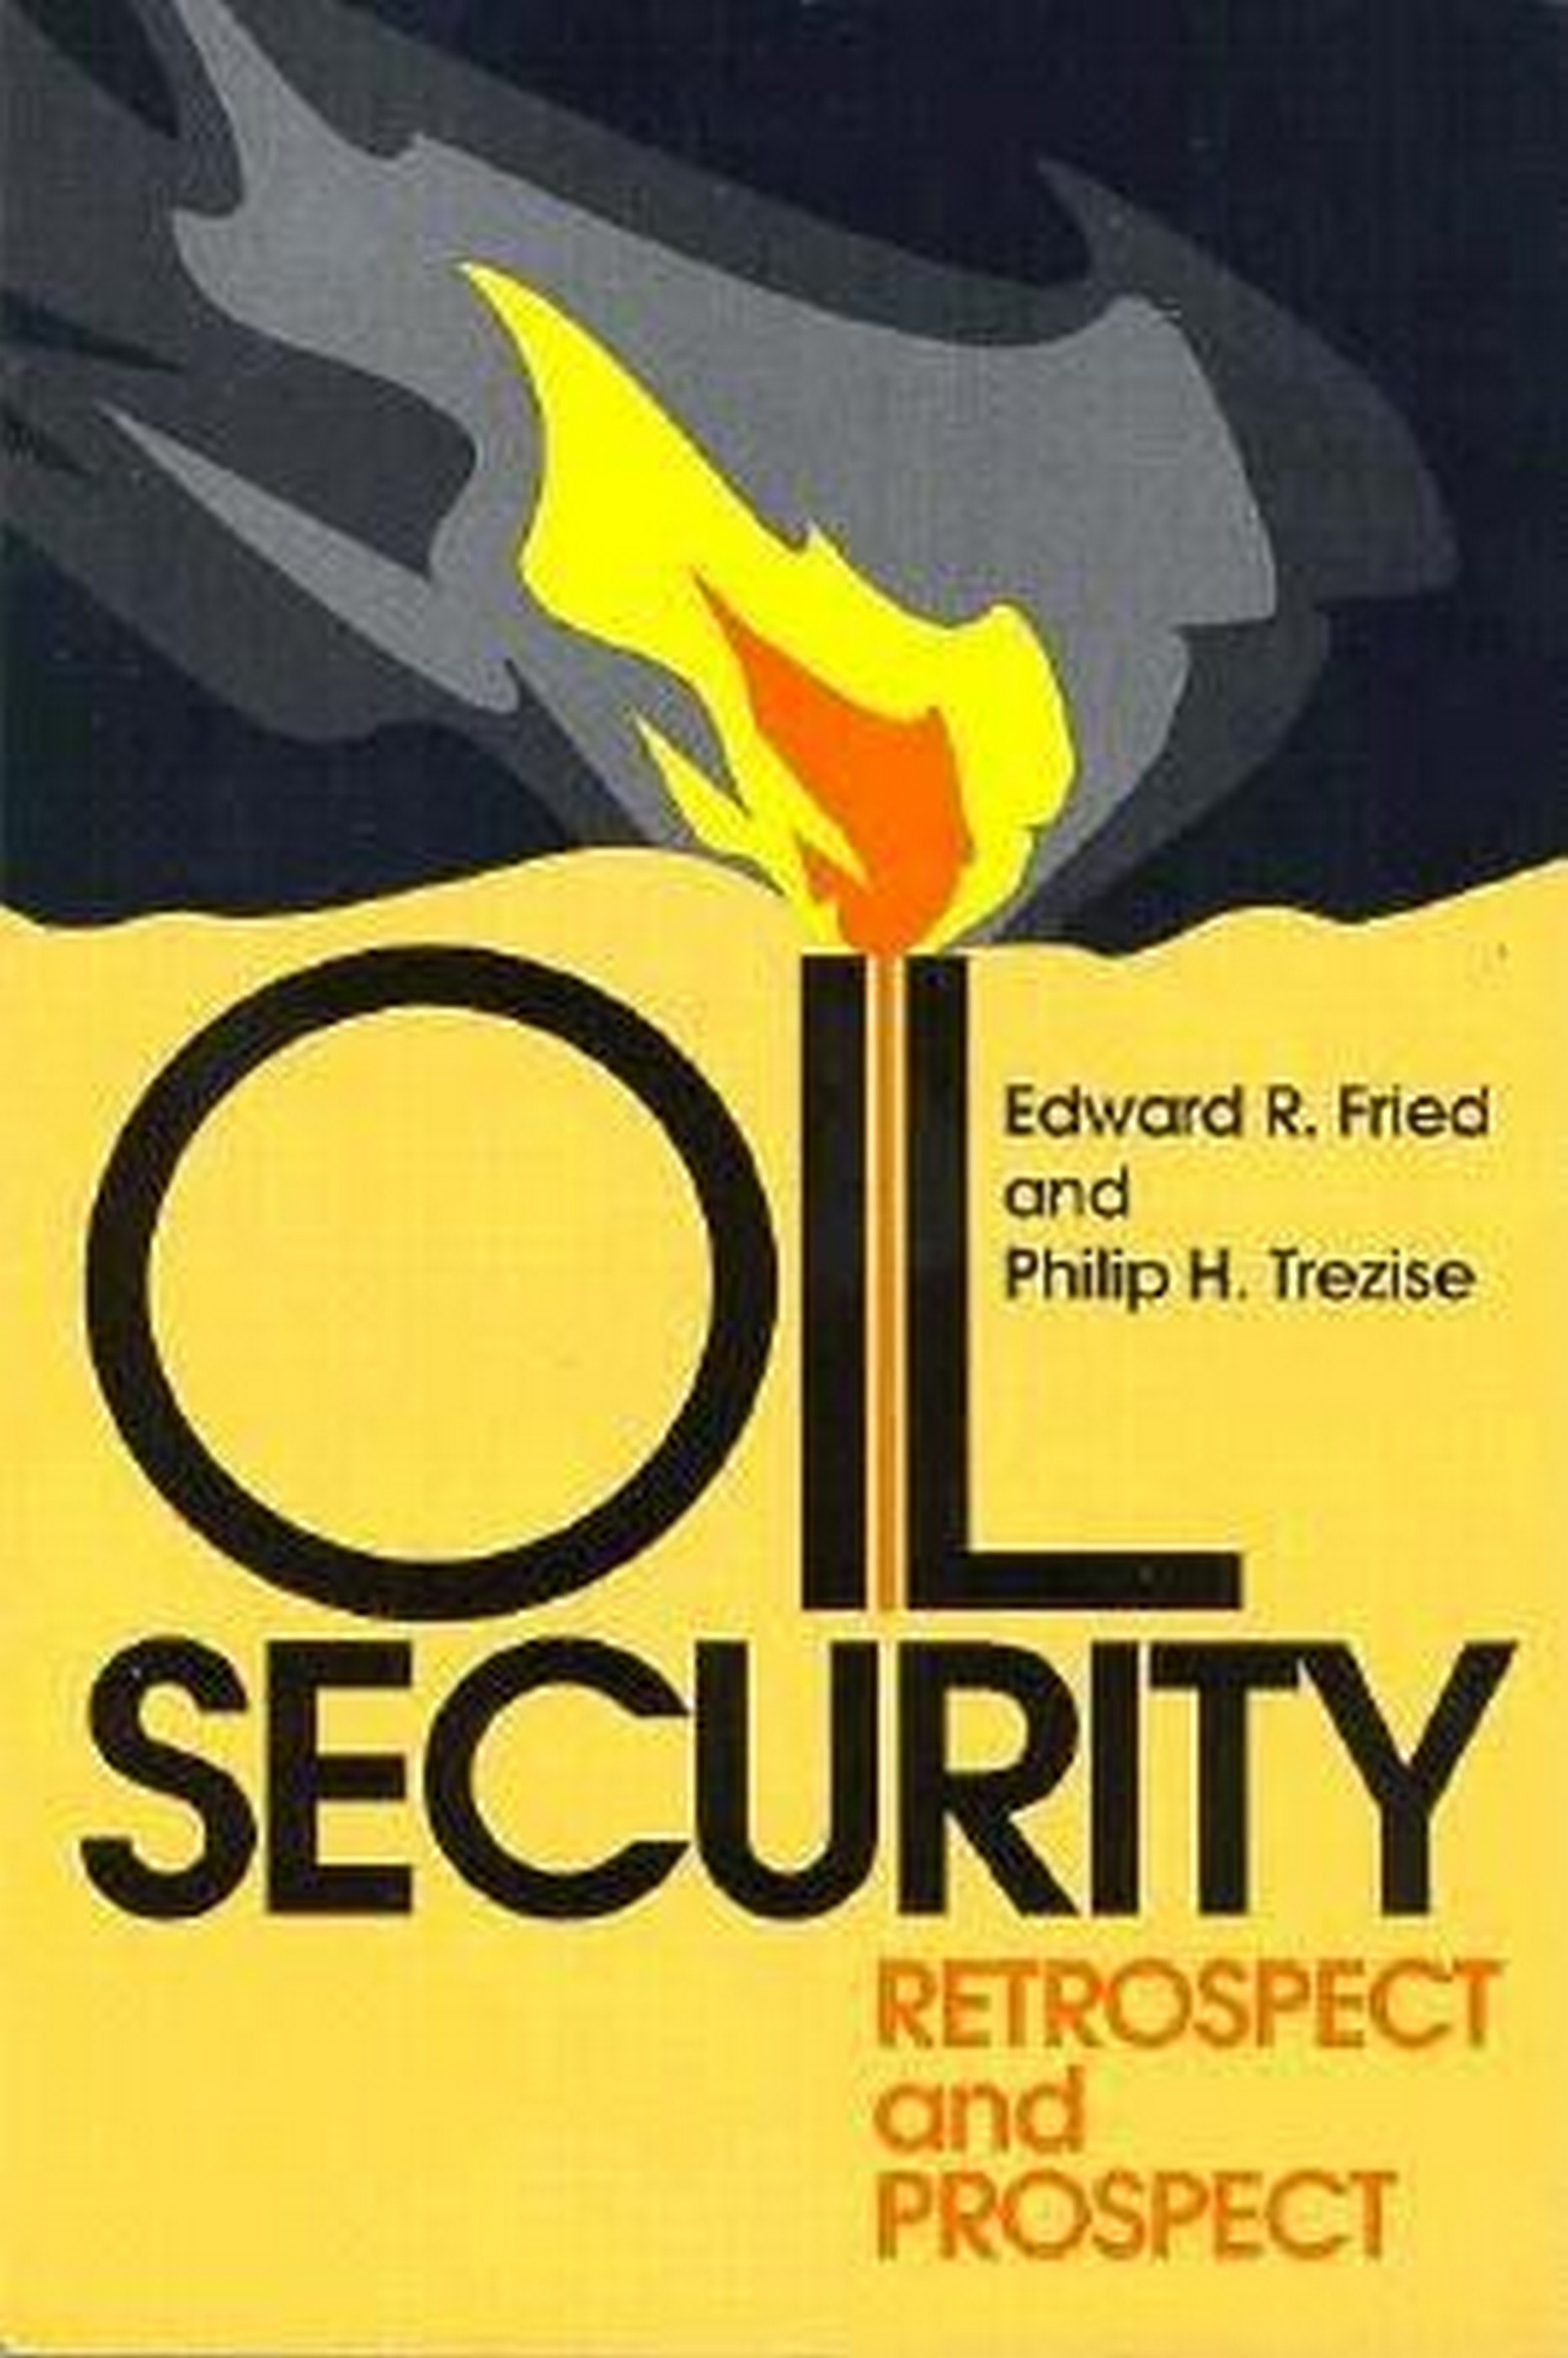 Oil Security: Retrospect and Prospect